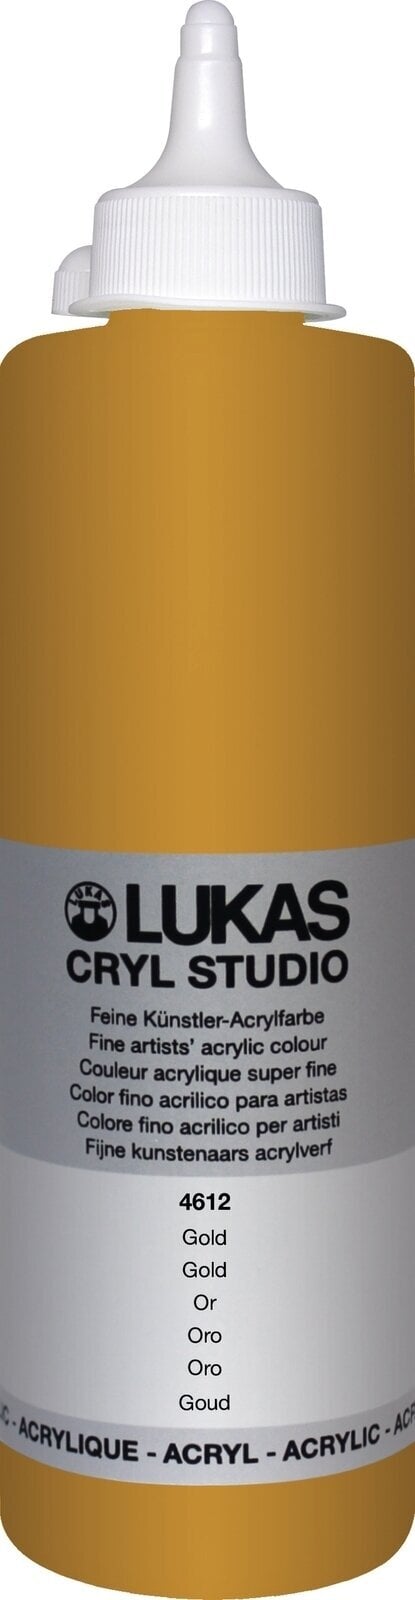 Akrylmaling Lukas Cryl Studio Acrylic Paint Plastic Bottle Akrylmaling Gold 500 ml 1 stk.